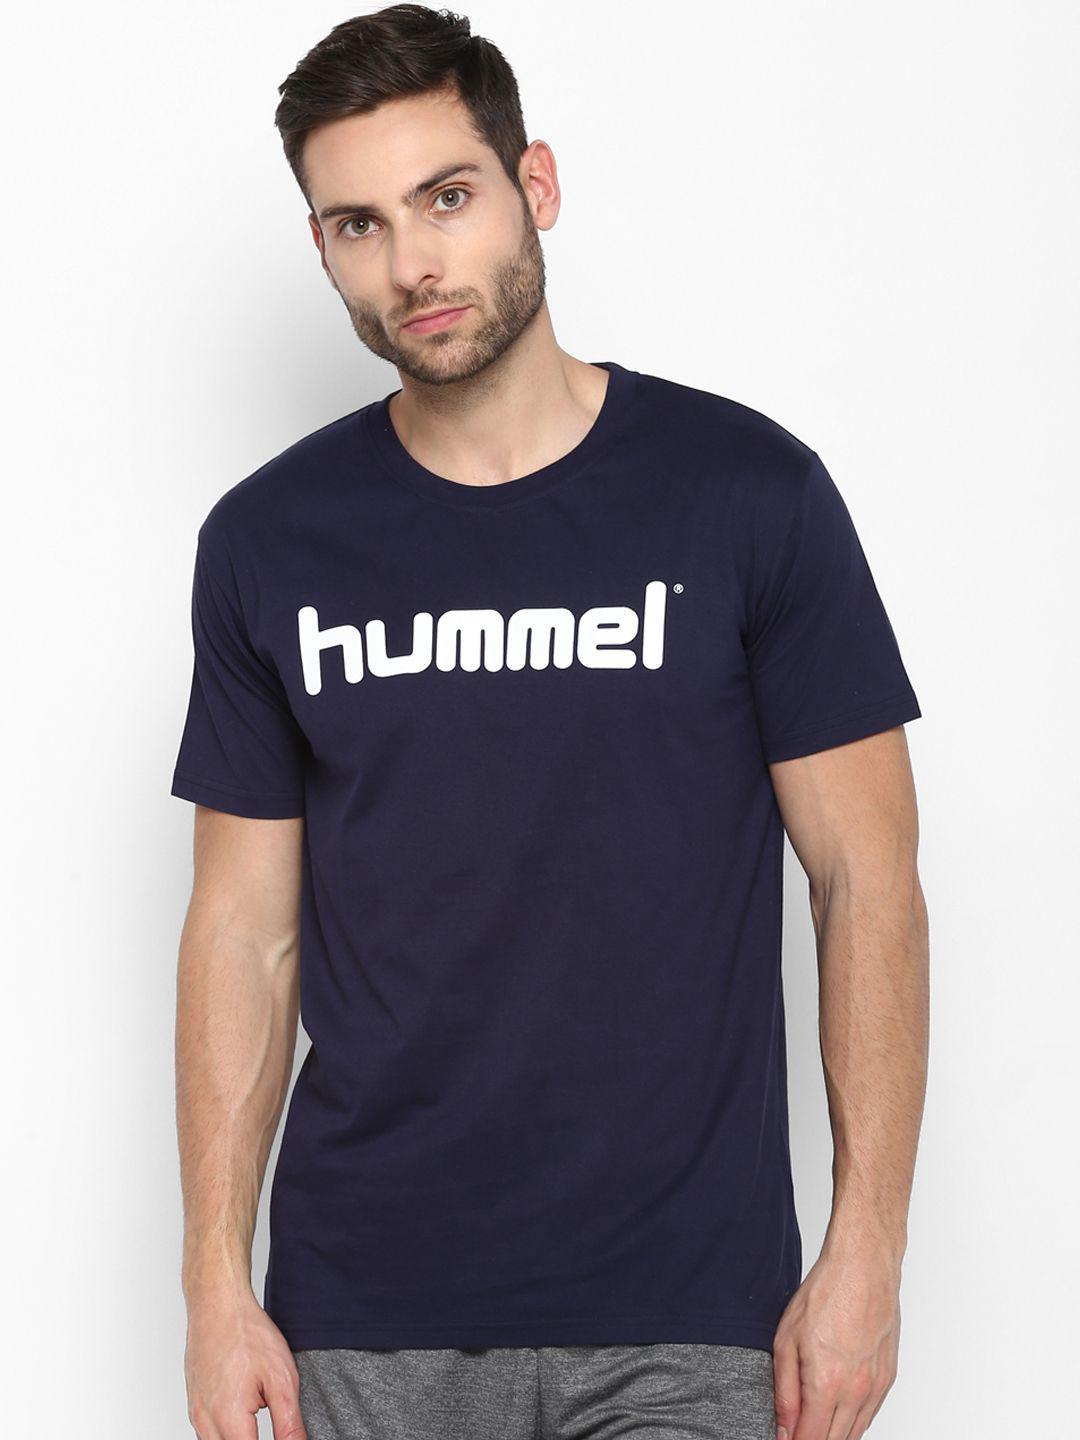 hummel men navy blue printed round neck t-shirt